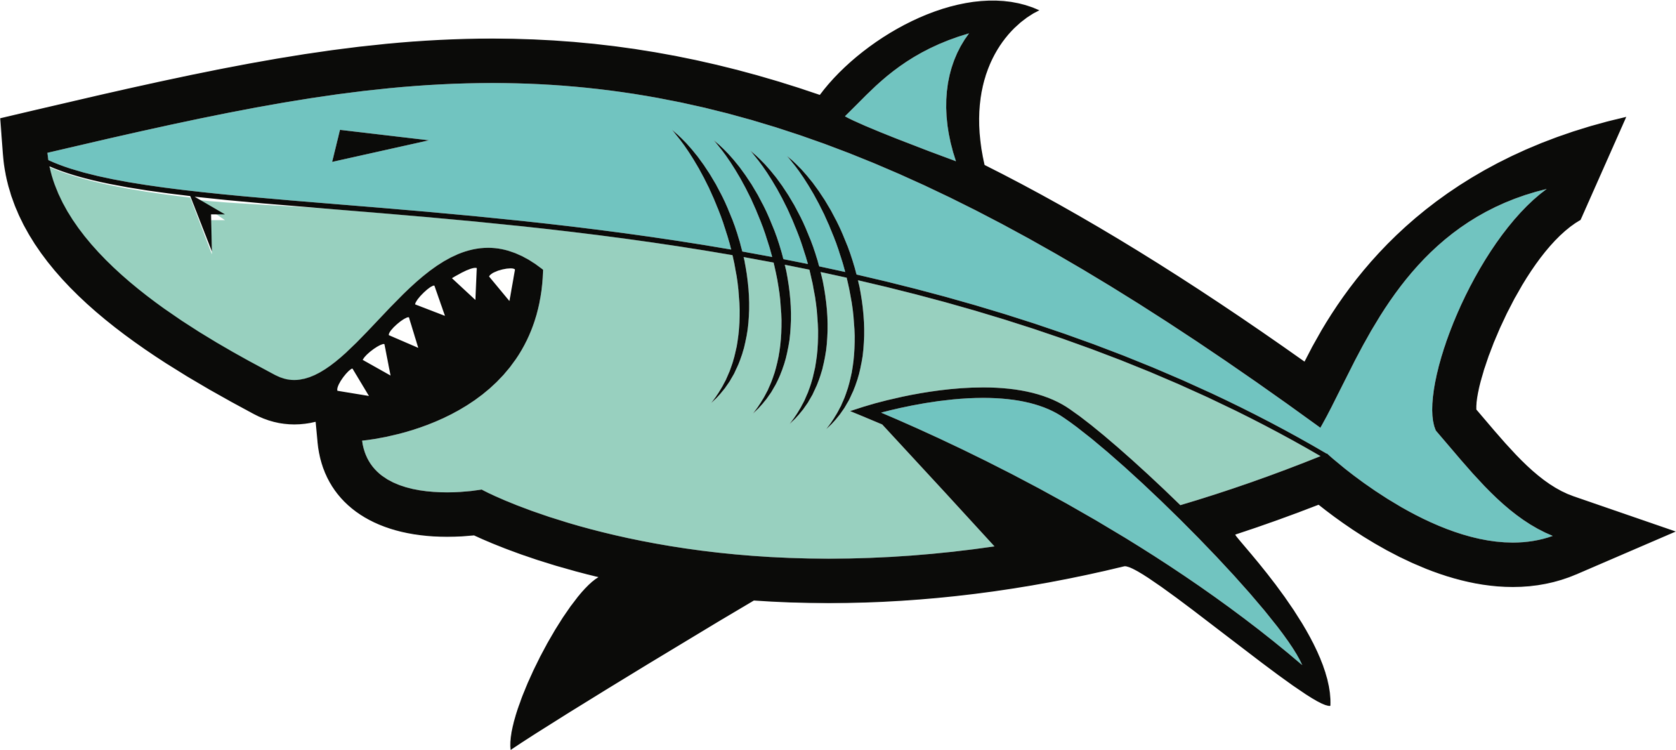 Download Marine Biology,Shark,Fin PNG Clipart - Royalty Free SVG / PNG